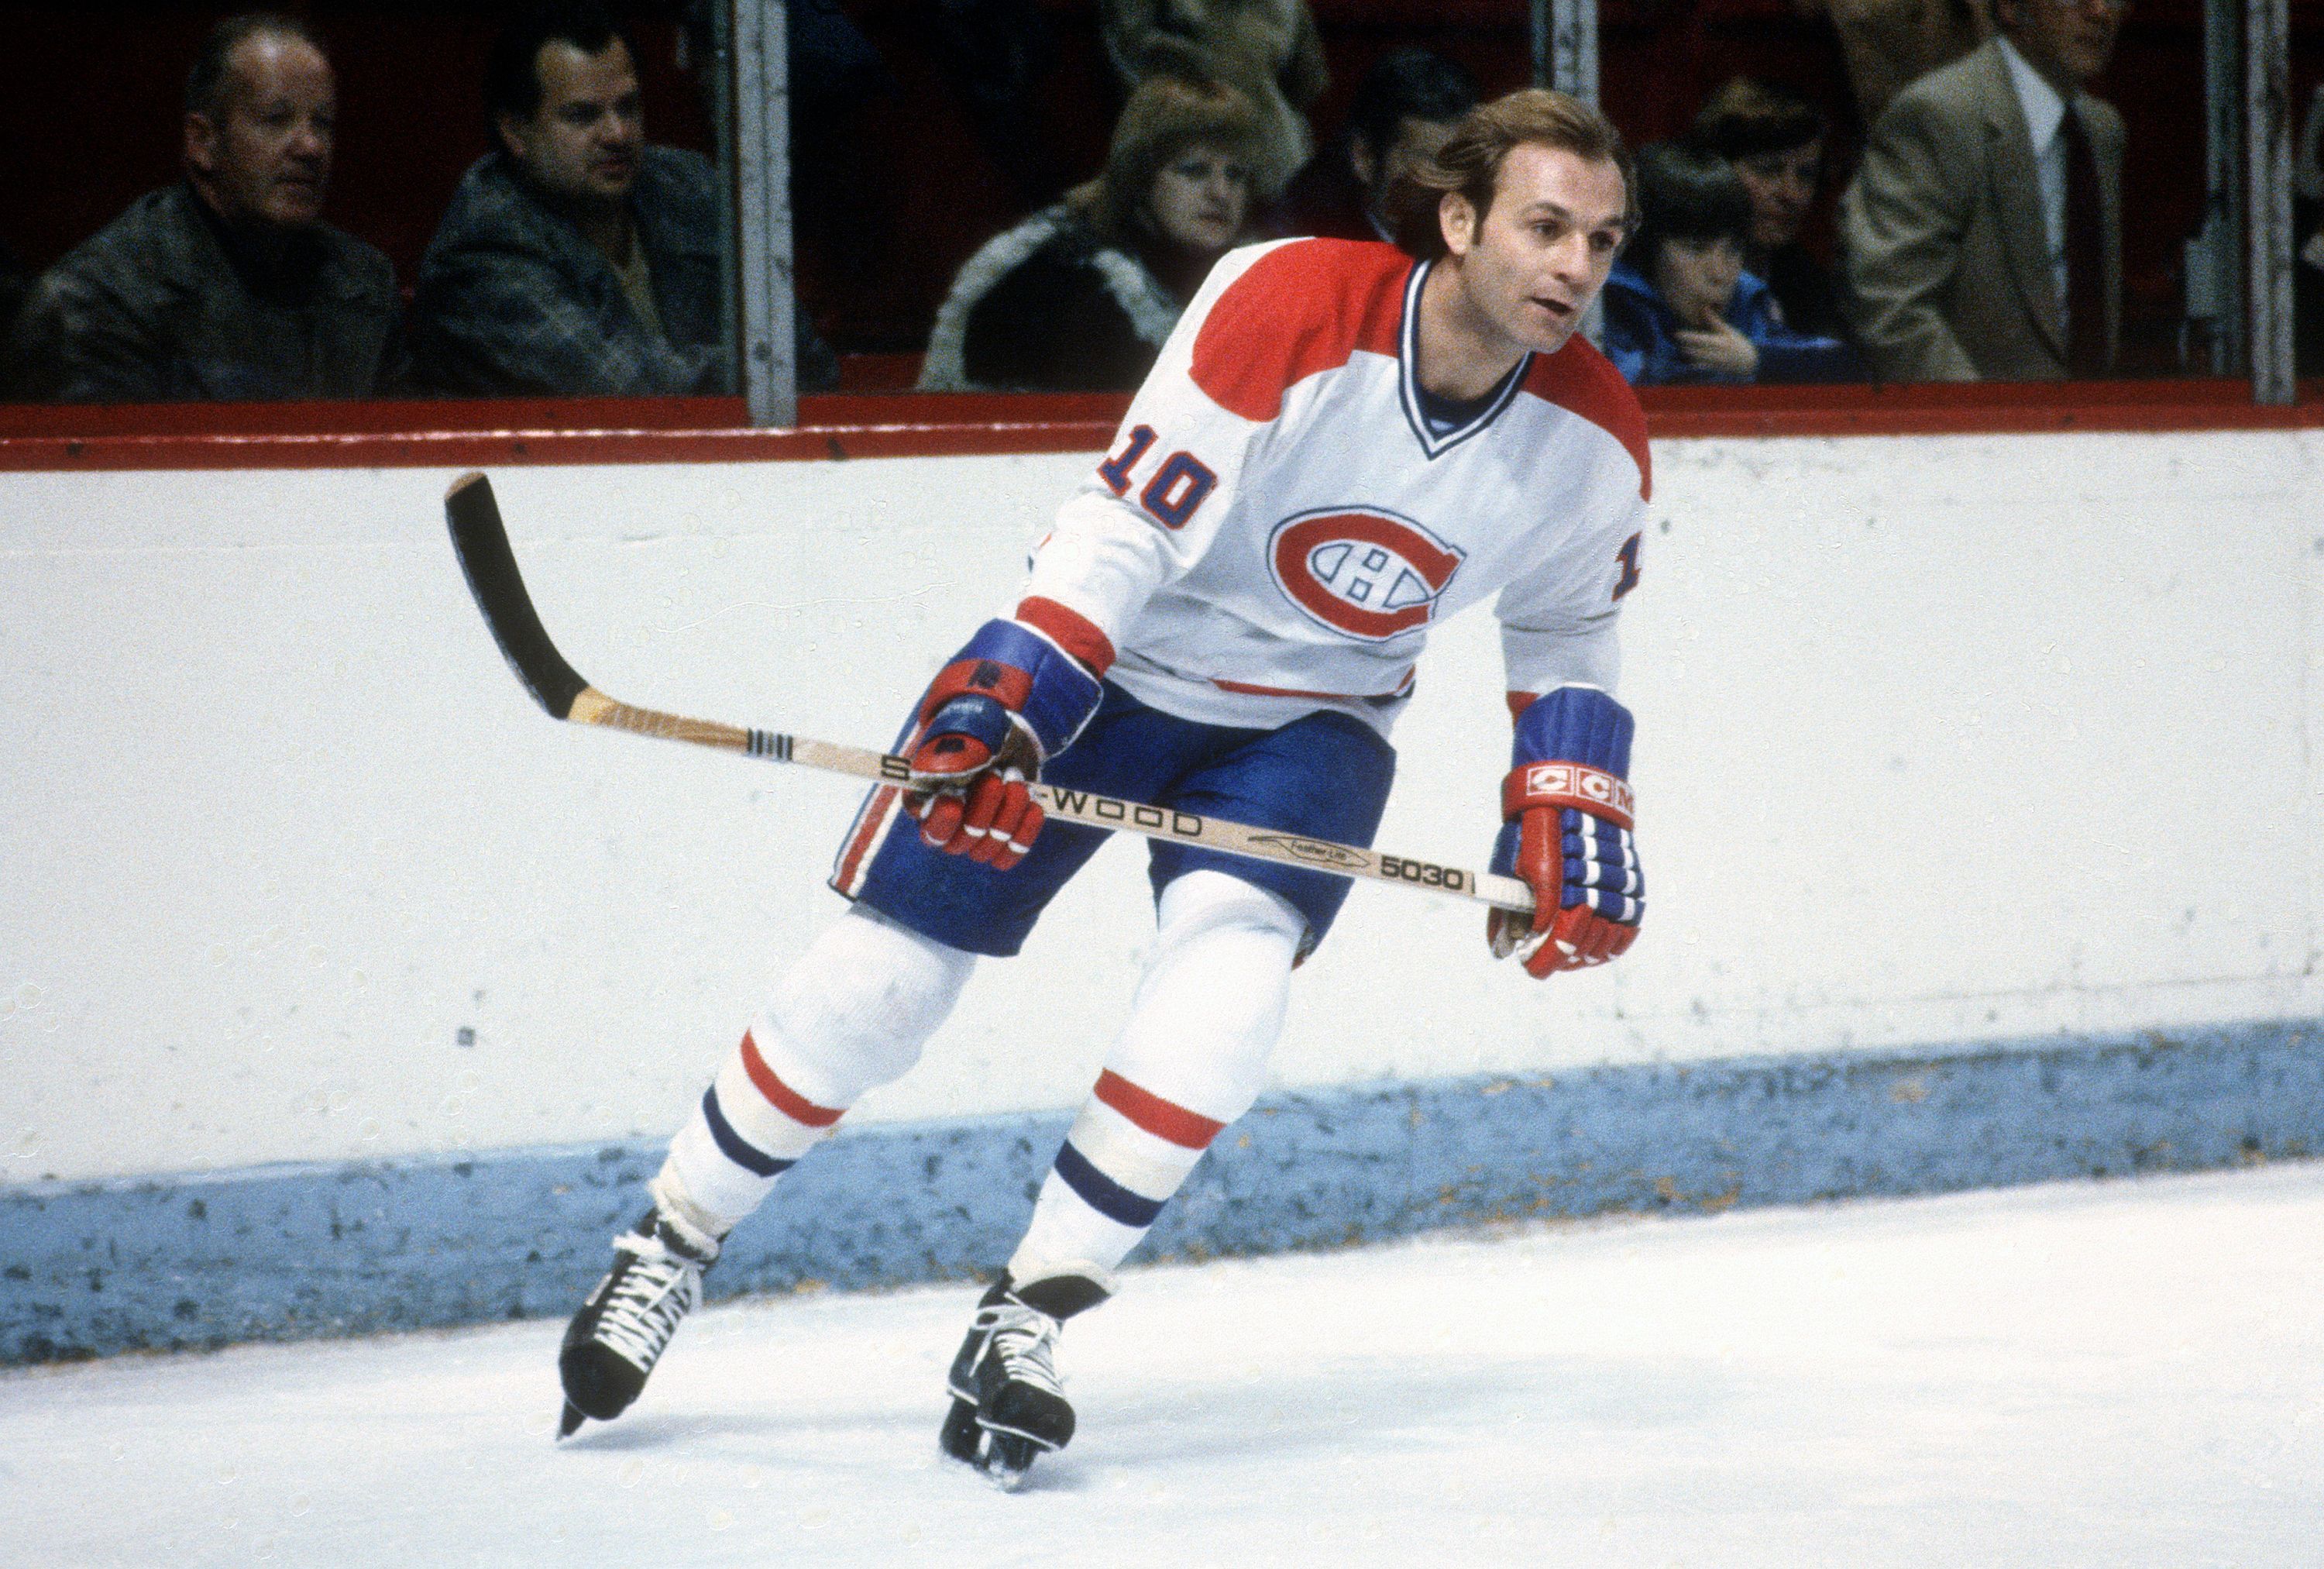 Montreal Canadiens Hockey Hall of Famer Guy Lafleur 